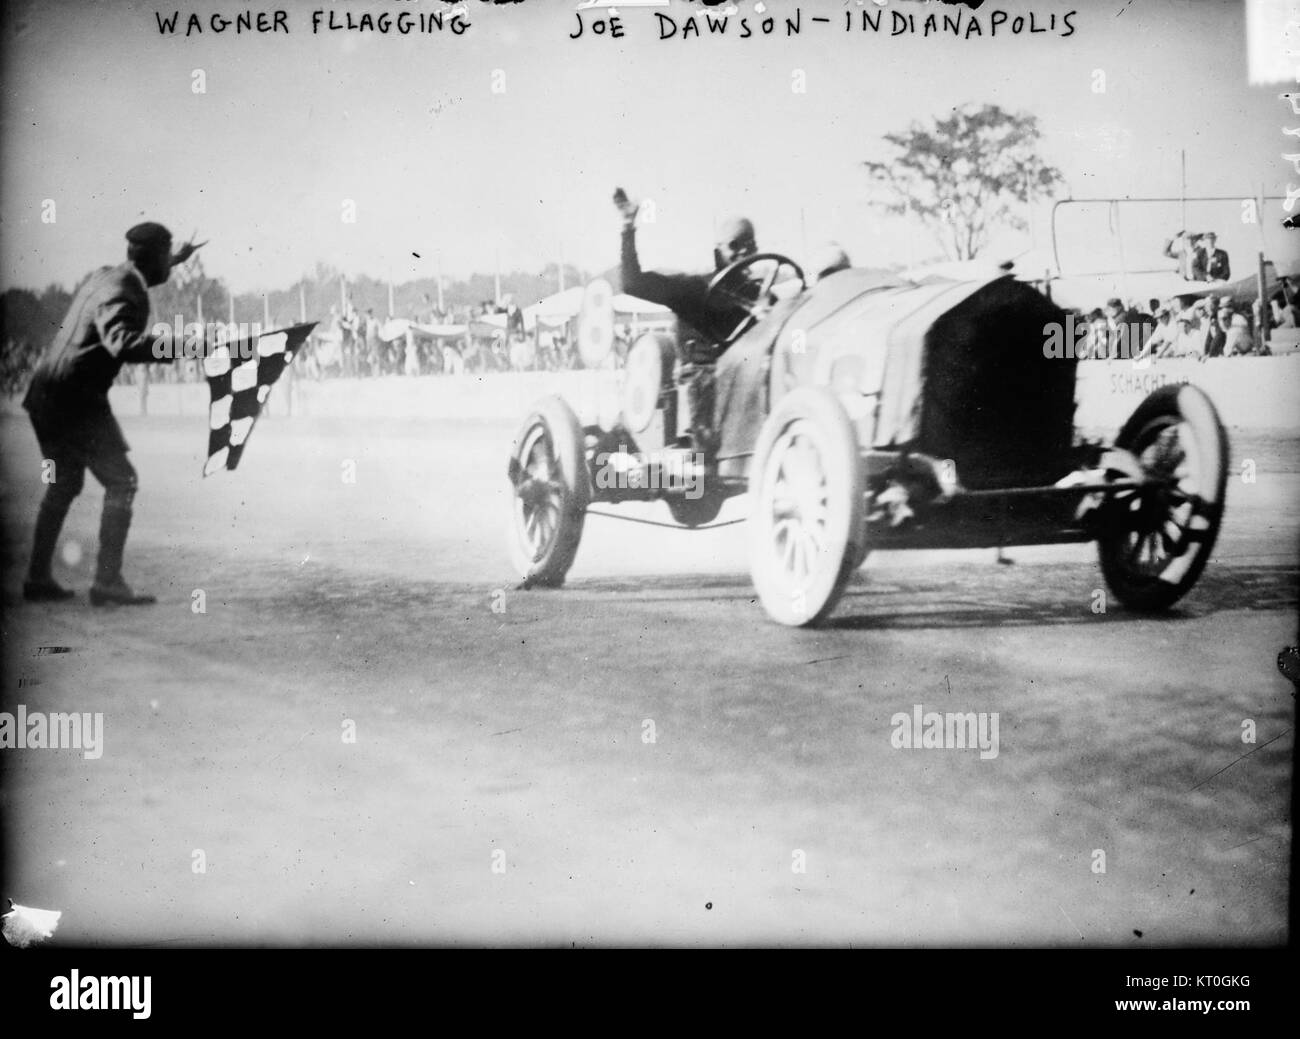 1912 Indianapolis 500, Joe Dawson winning Stock Photo